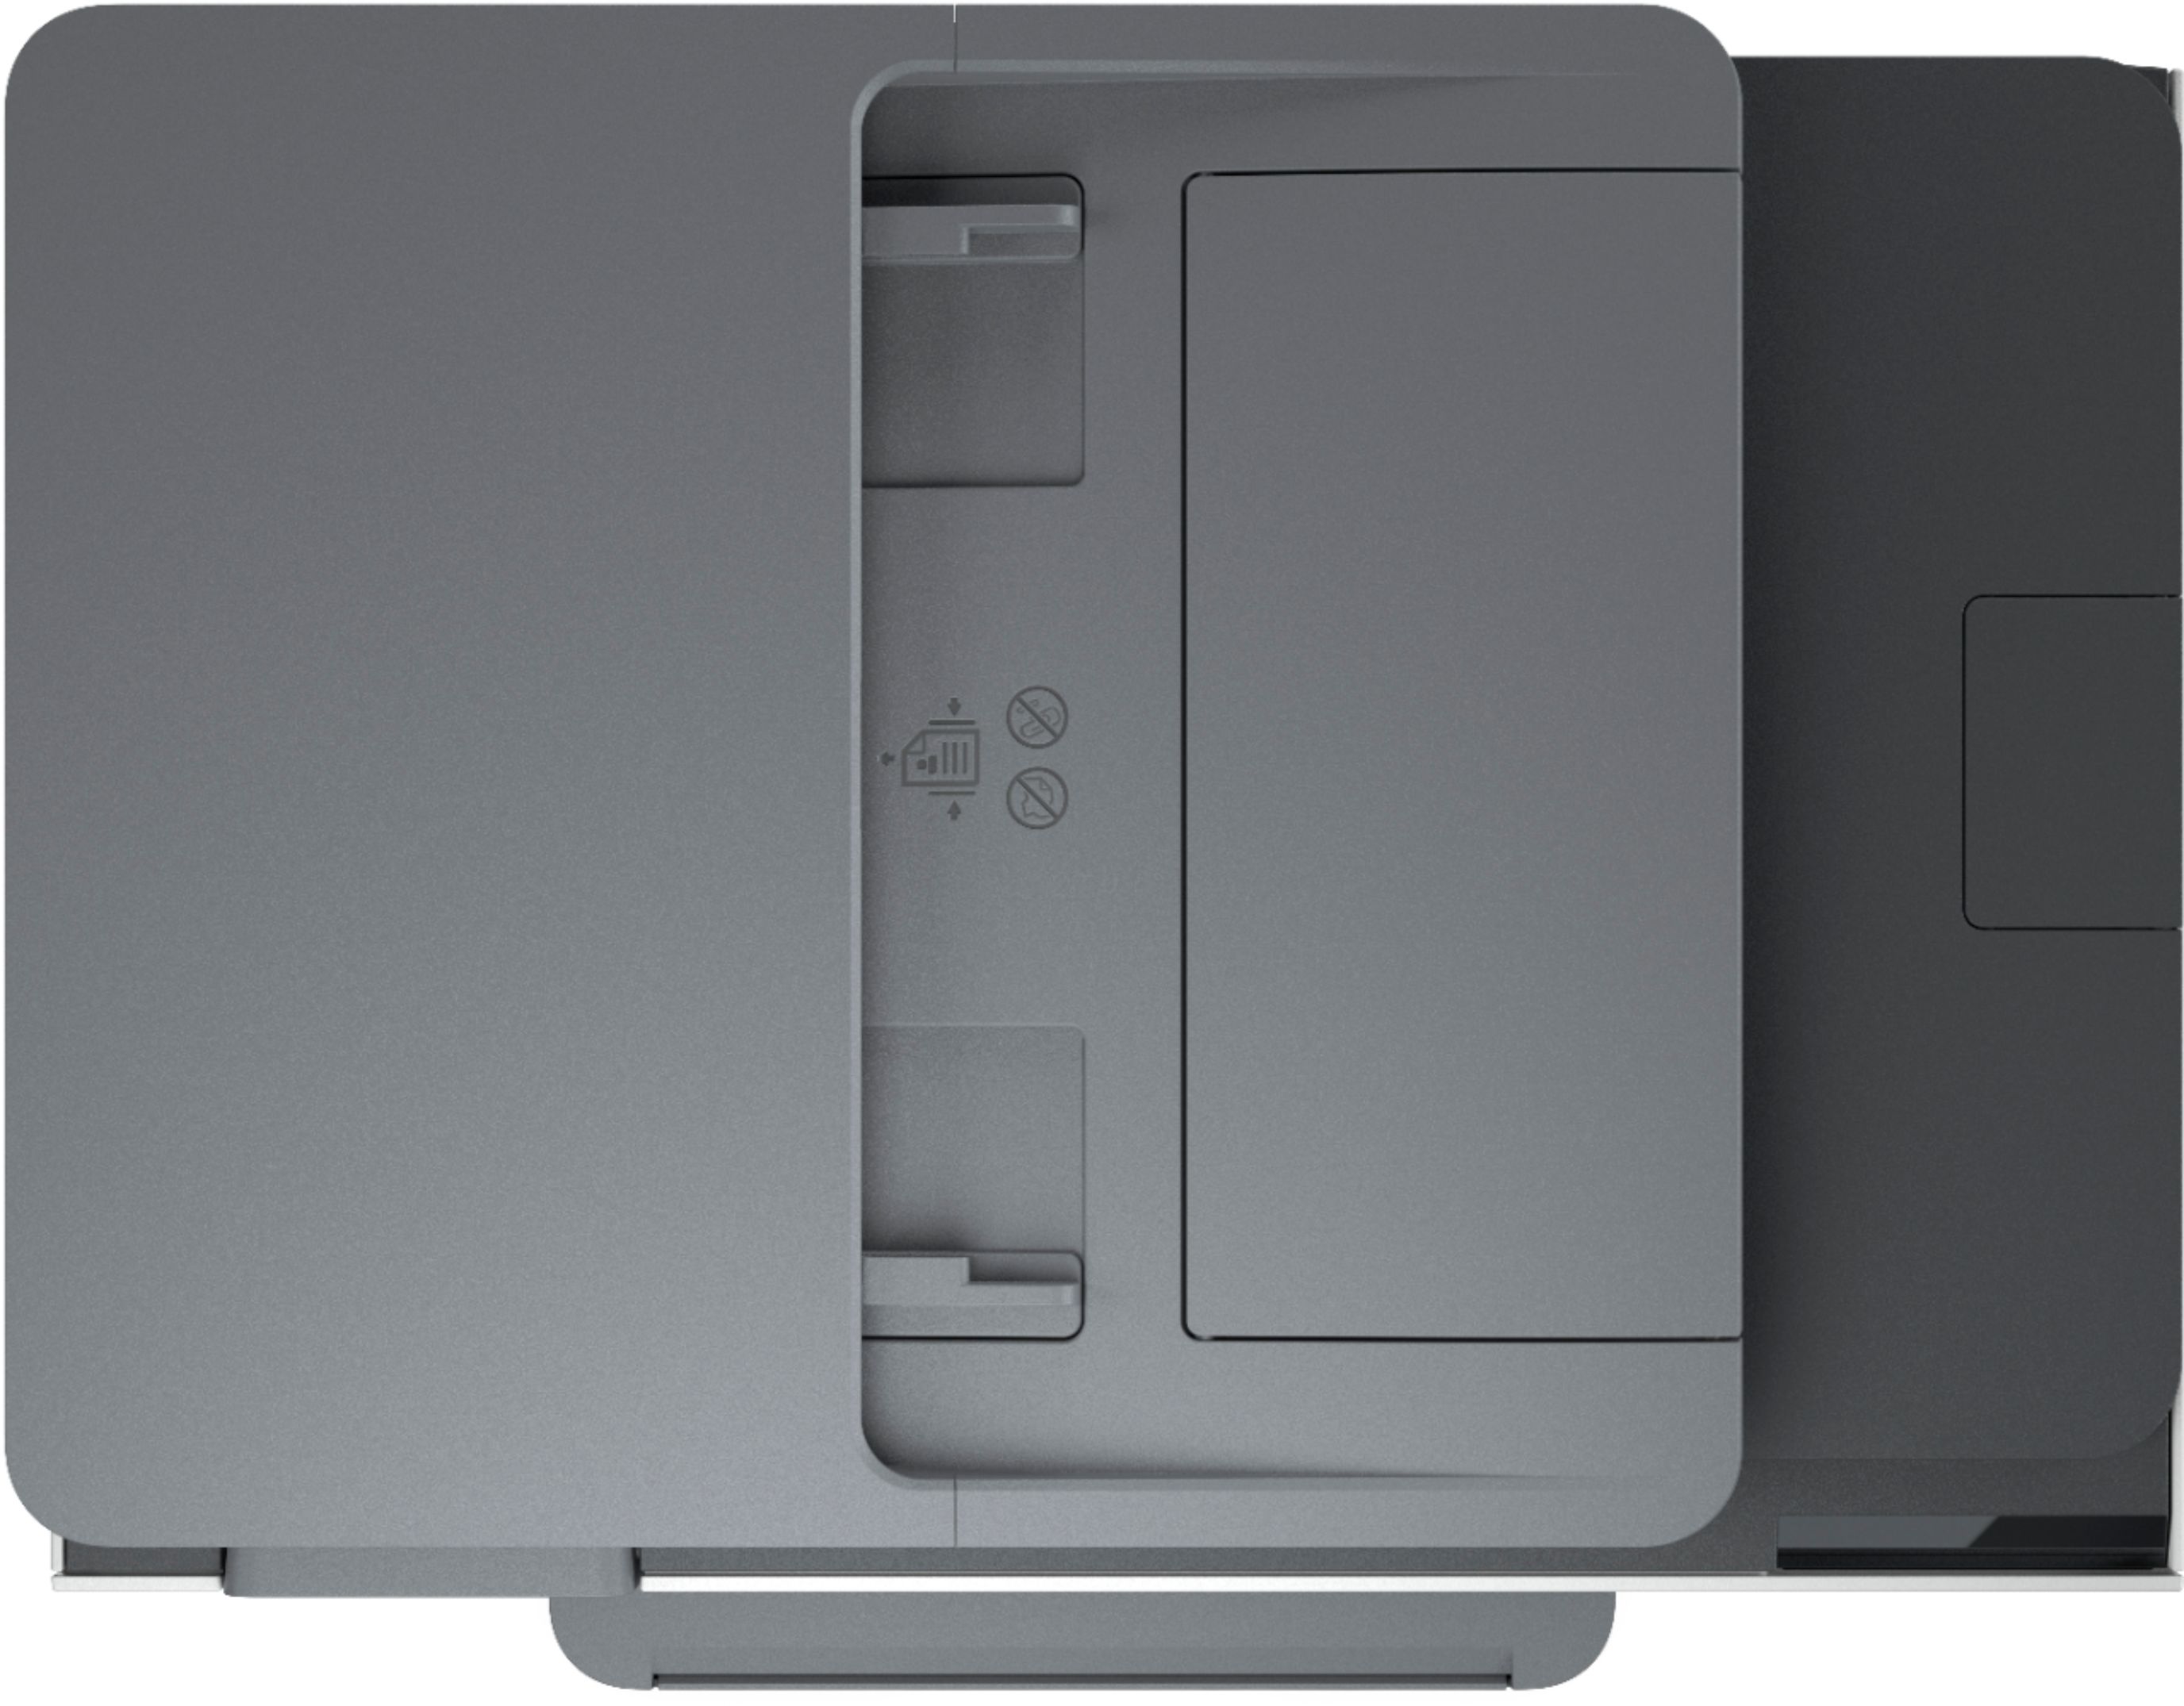 HP ENVY 5070 Wireless All-In-One Instant Ink Ready  - Best Buy